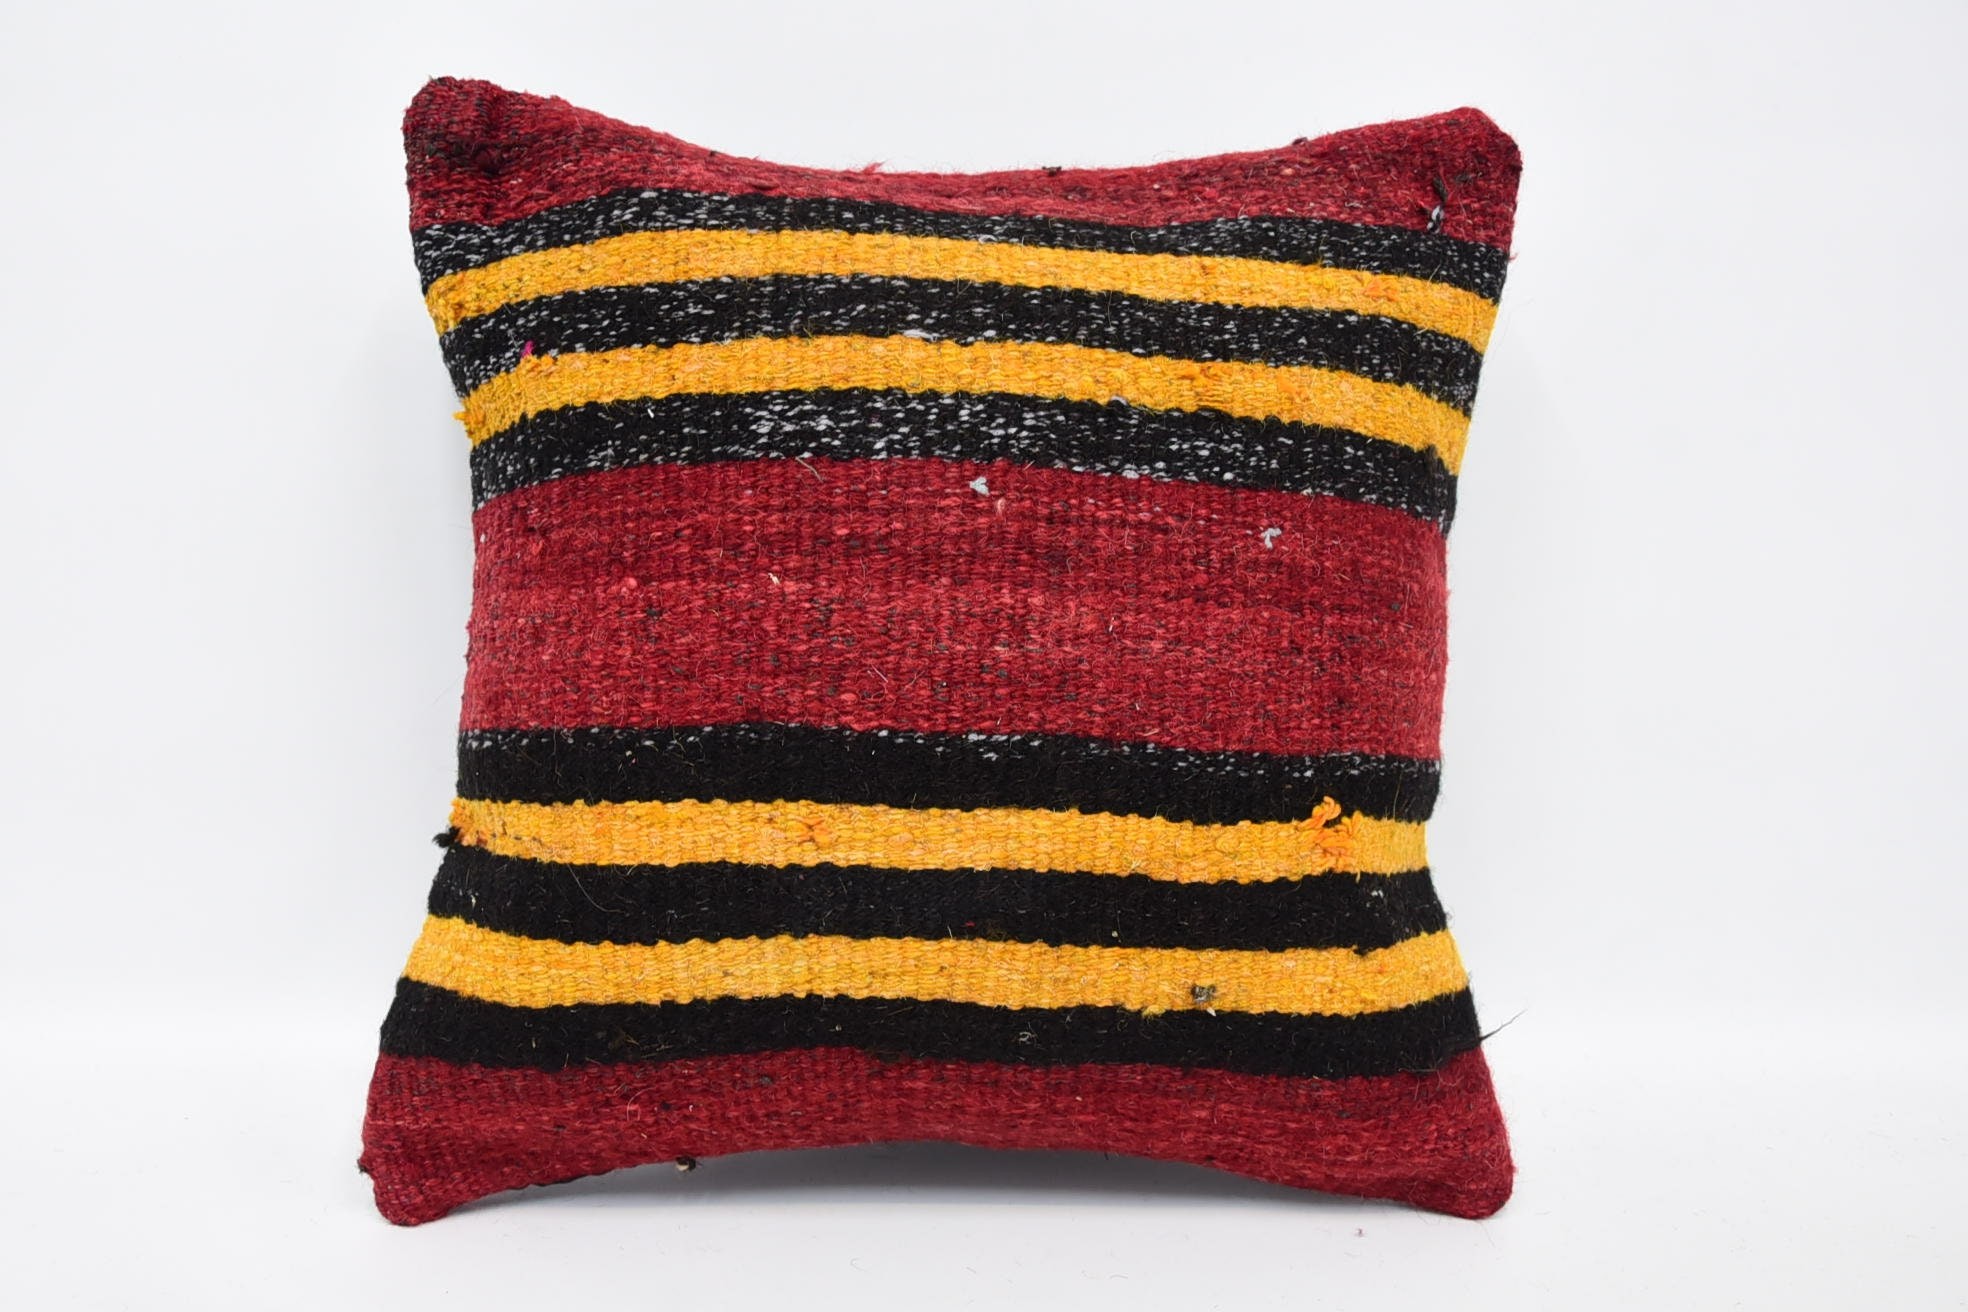 Ethnic Cushion Case, 18"x18" Red Pillow Cover, Cozy Throw Cushion, Decorative Cushion, Antique Pillows, Kilim Pillow, Home Decor Pillow